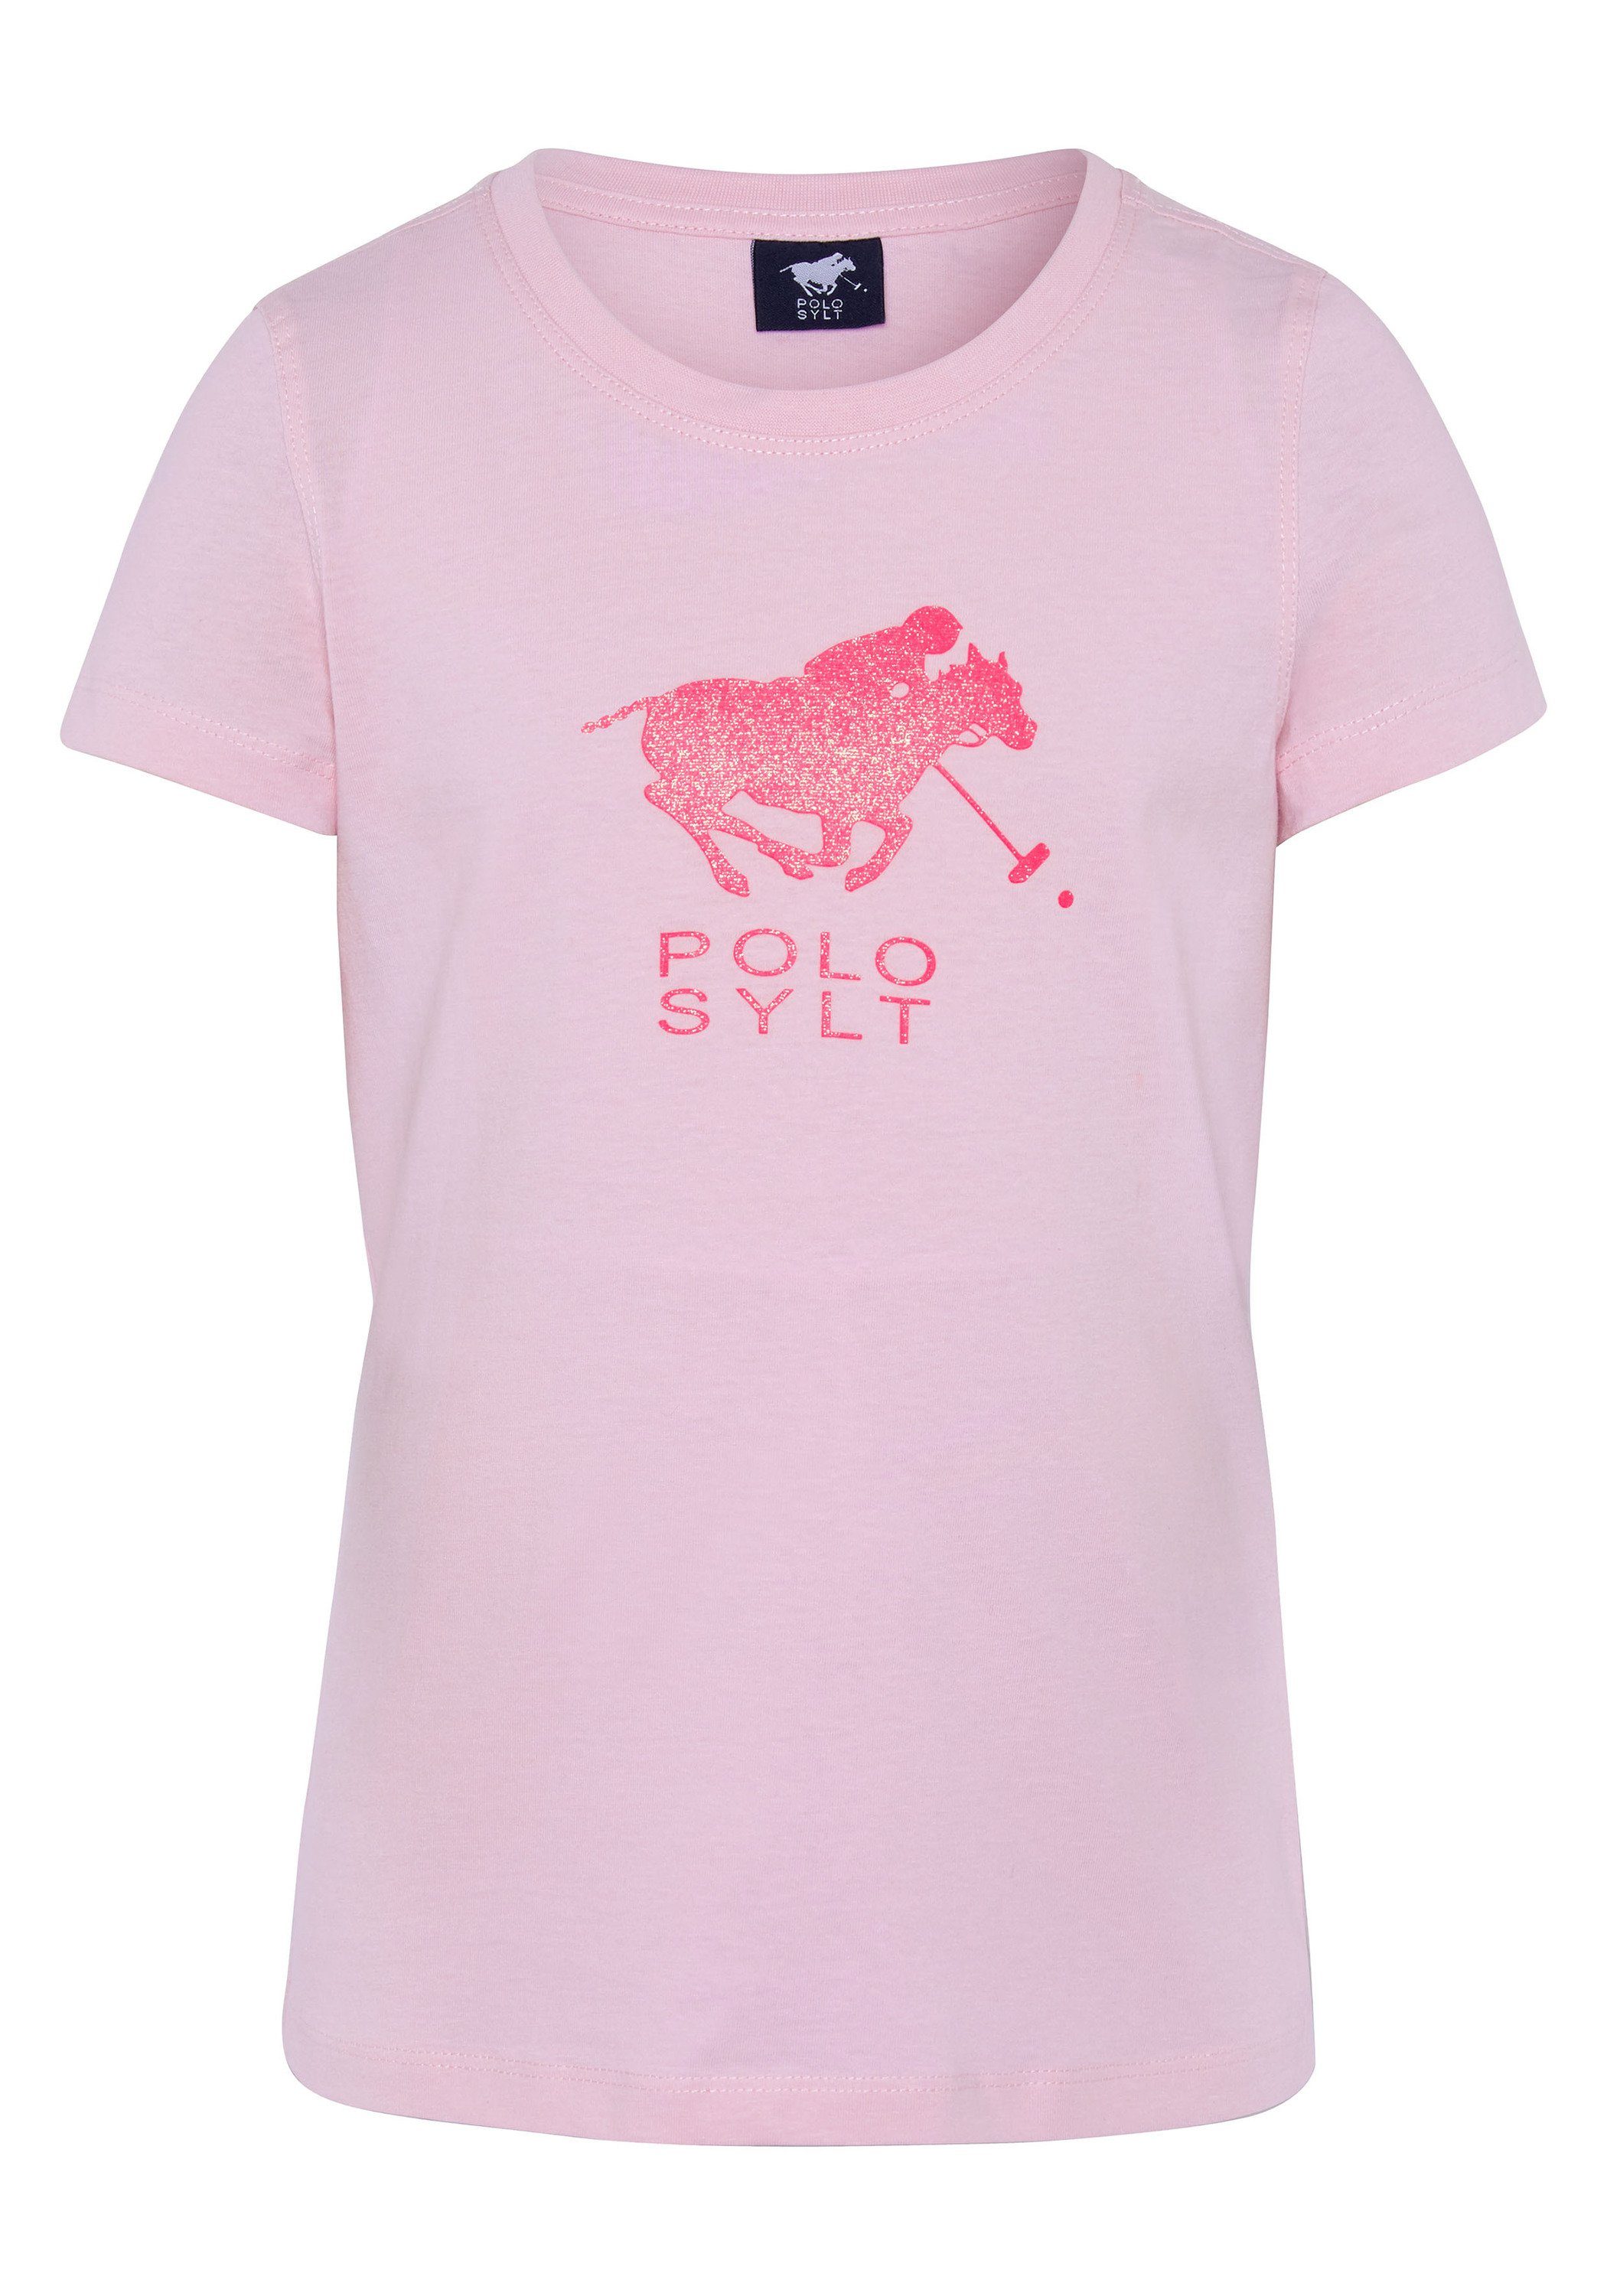 Polo Sylt Print-Shirt mit Glitzer-Logo Pink Lady